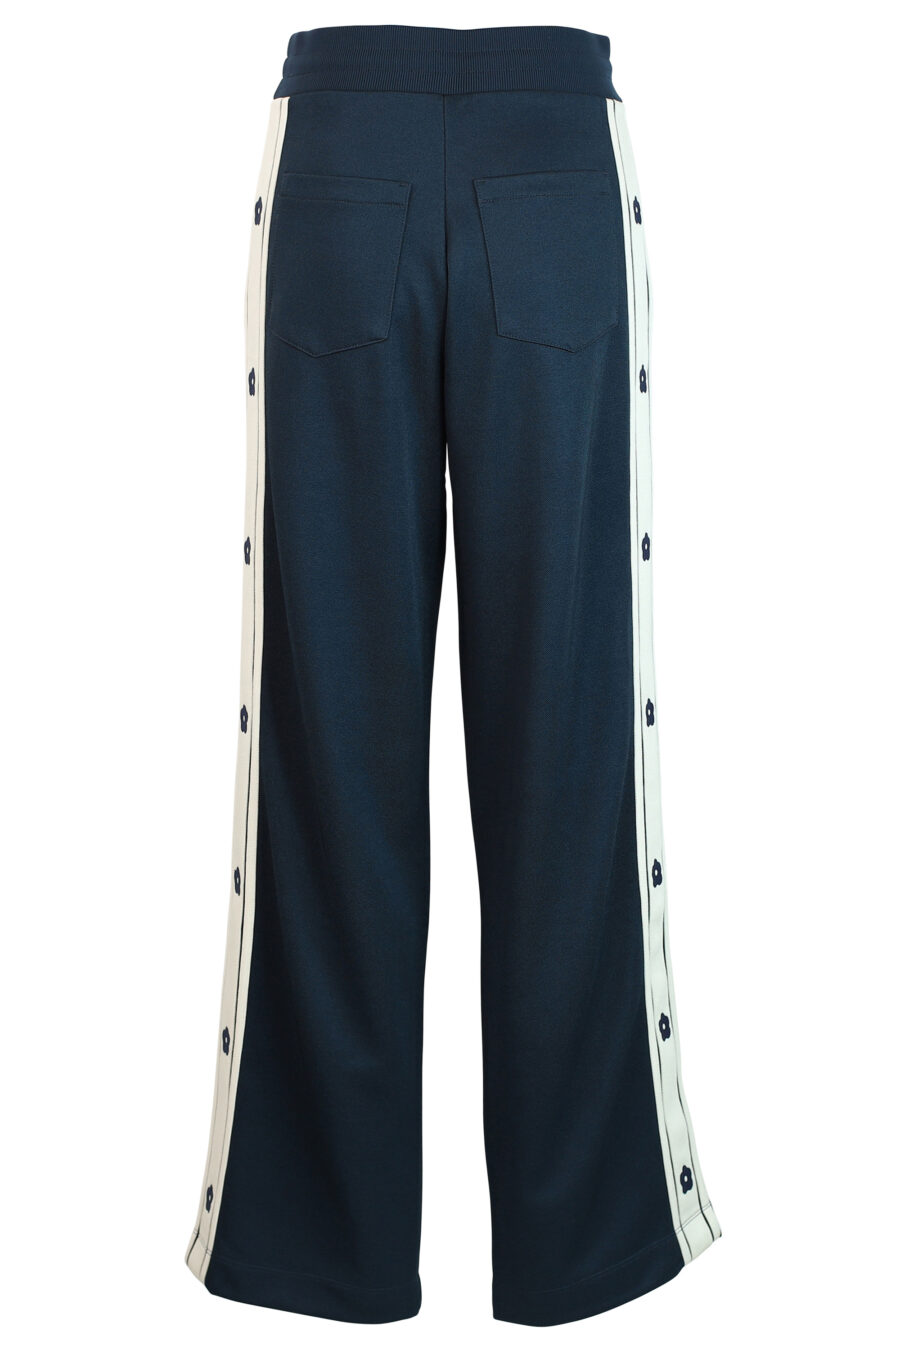 Pantalón de chándal azul con beige y logo laterales - 3612230456457 3